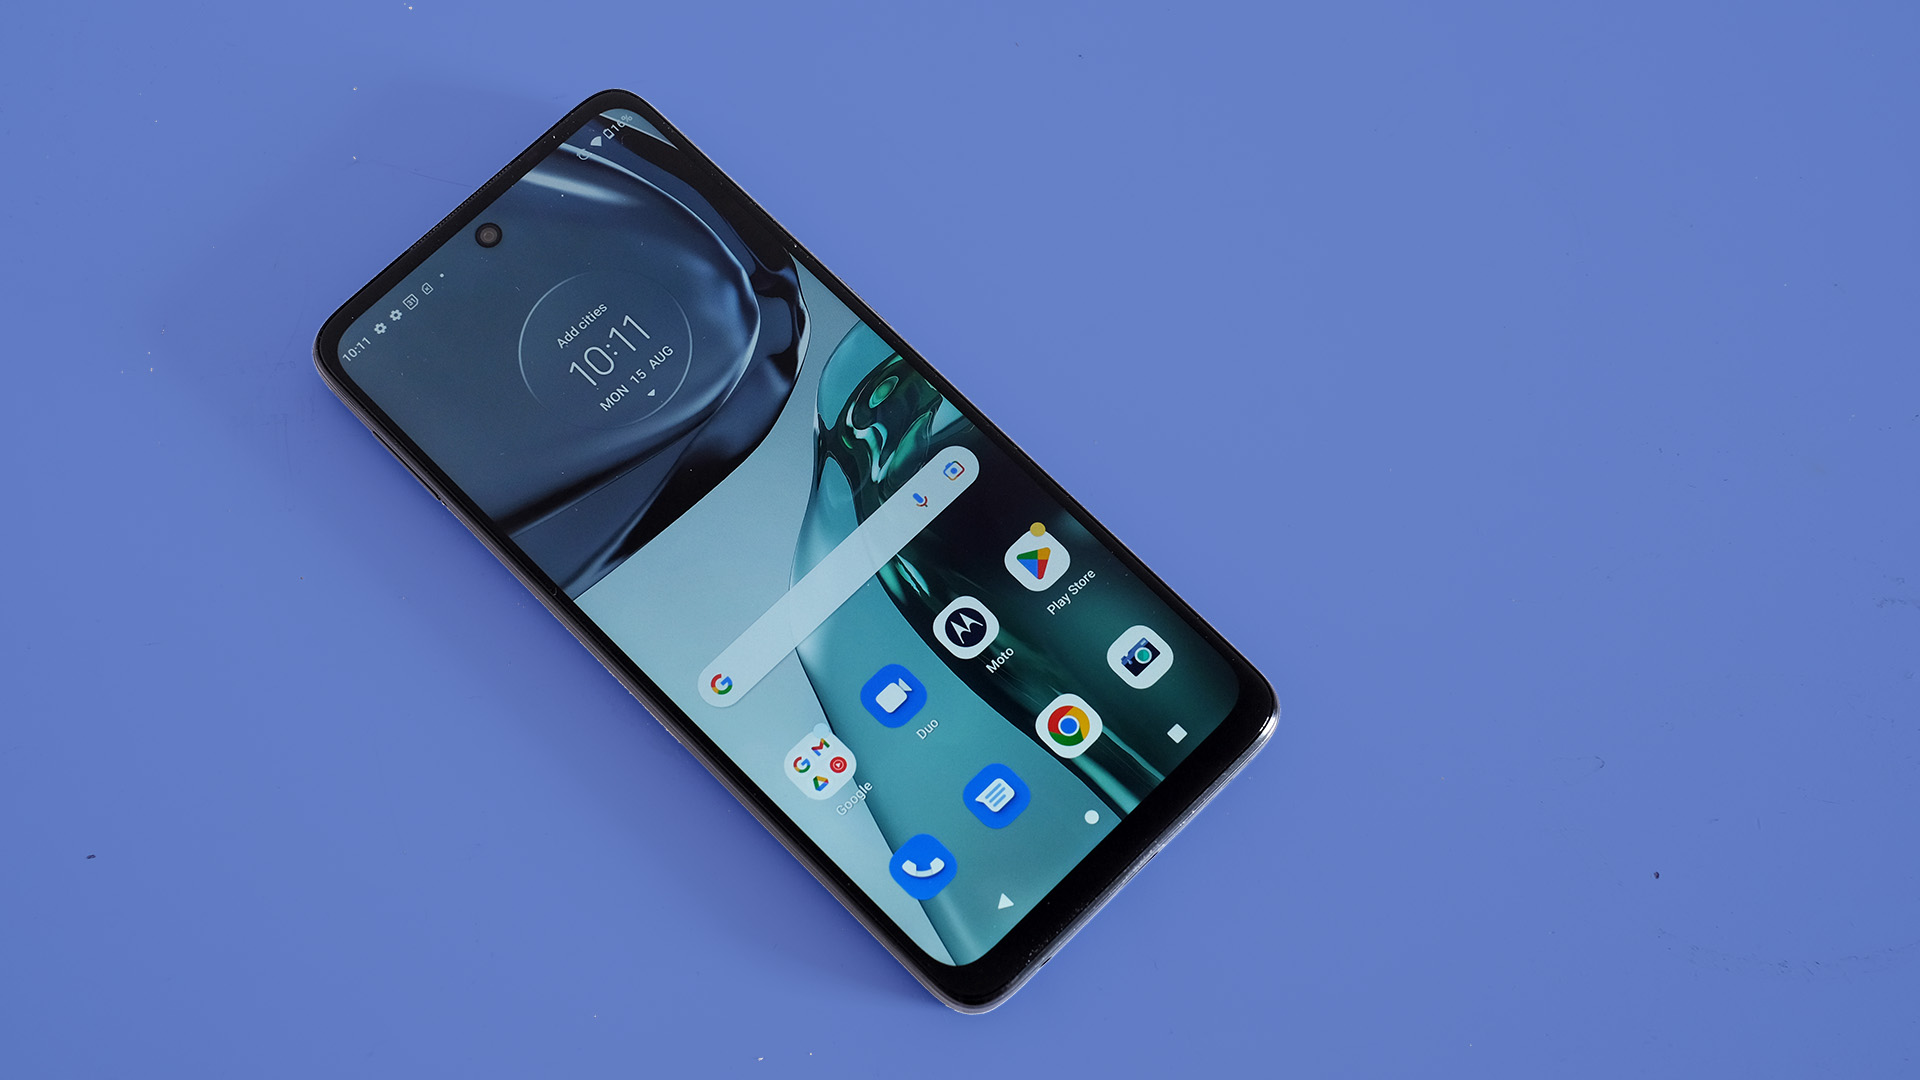 Motorola Moto G8 Power | Capri Blue | €203 | Now with a 30-Day Trial Period